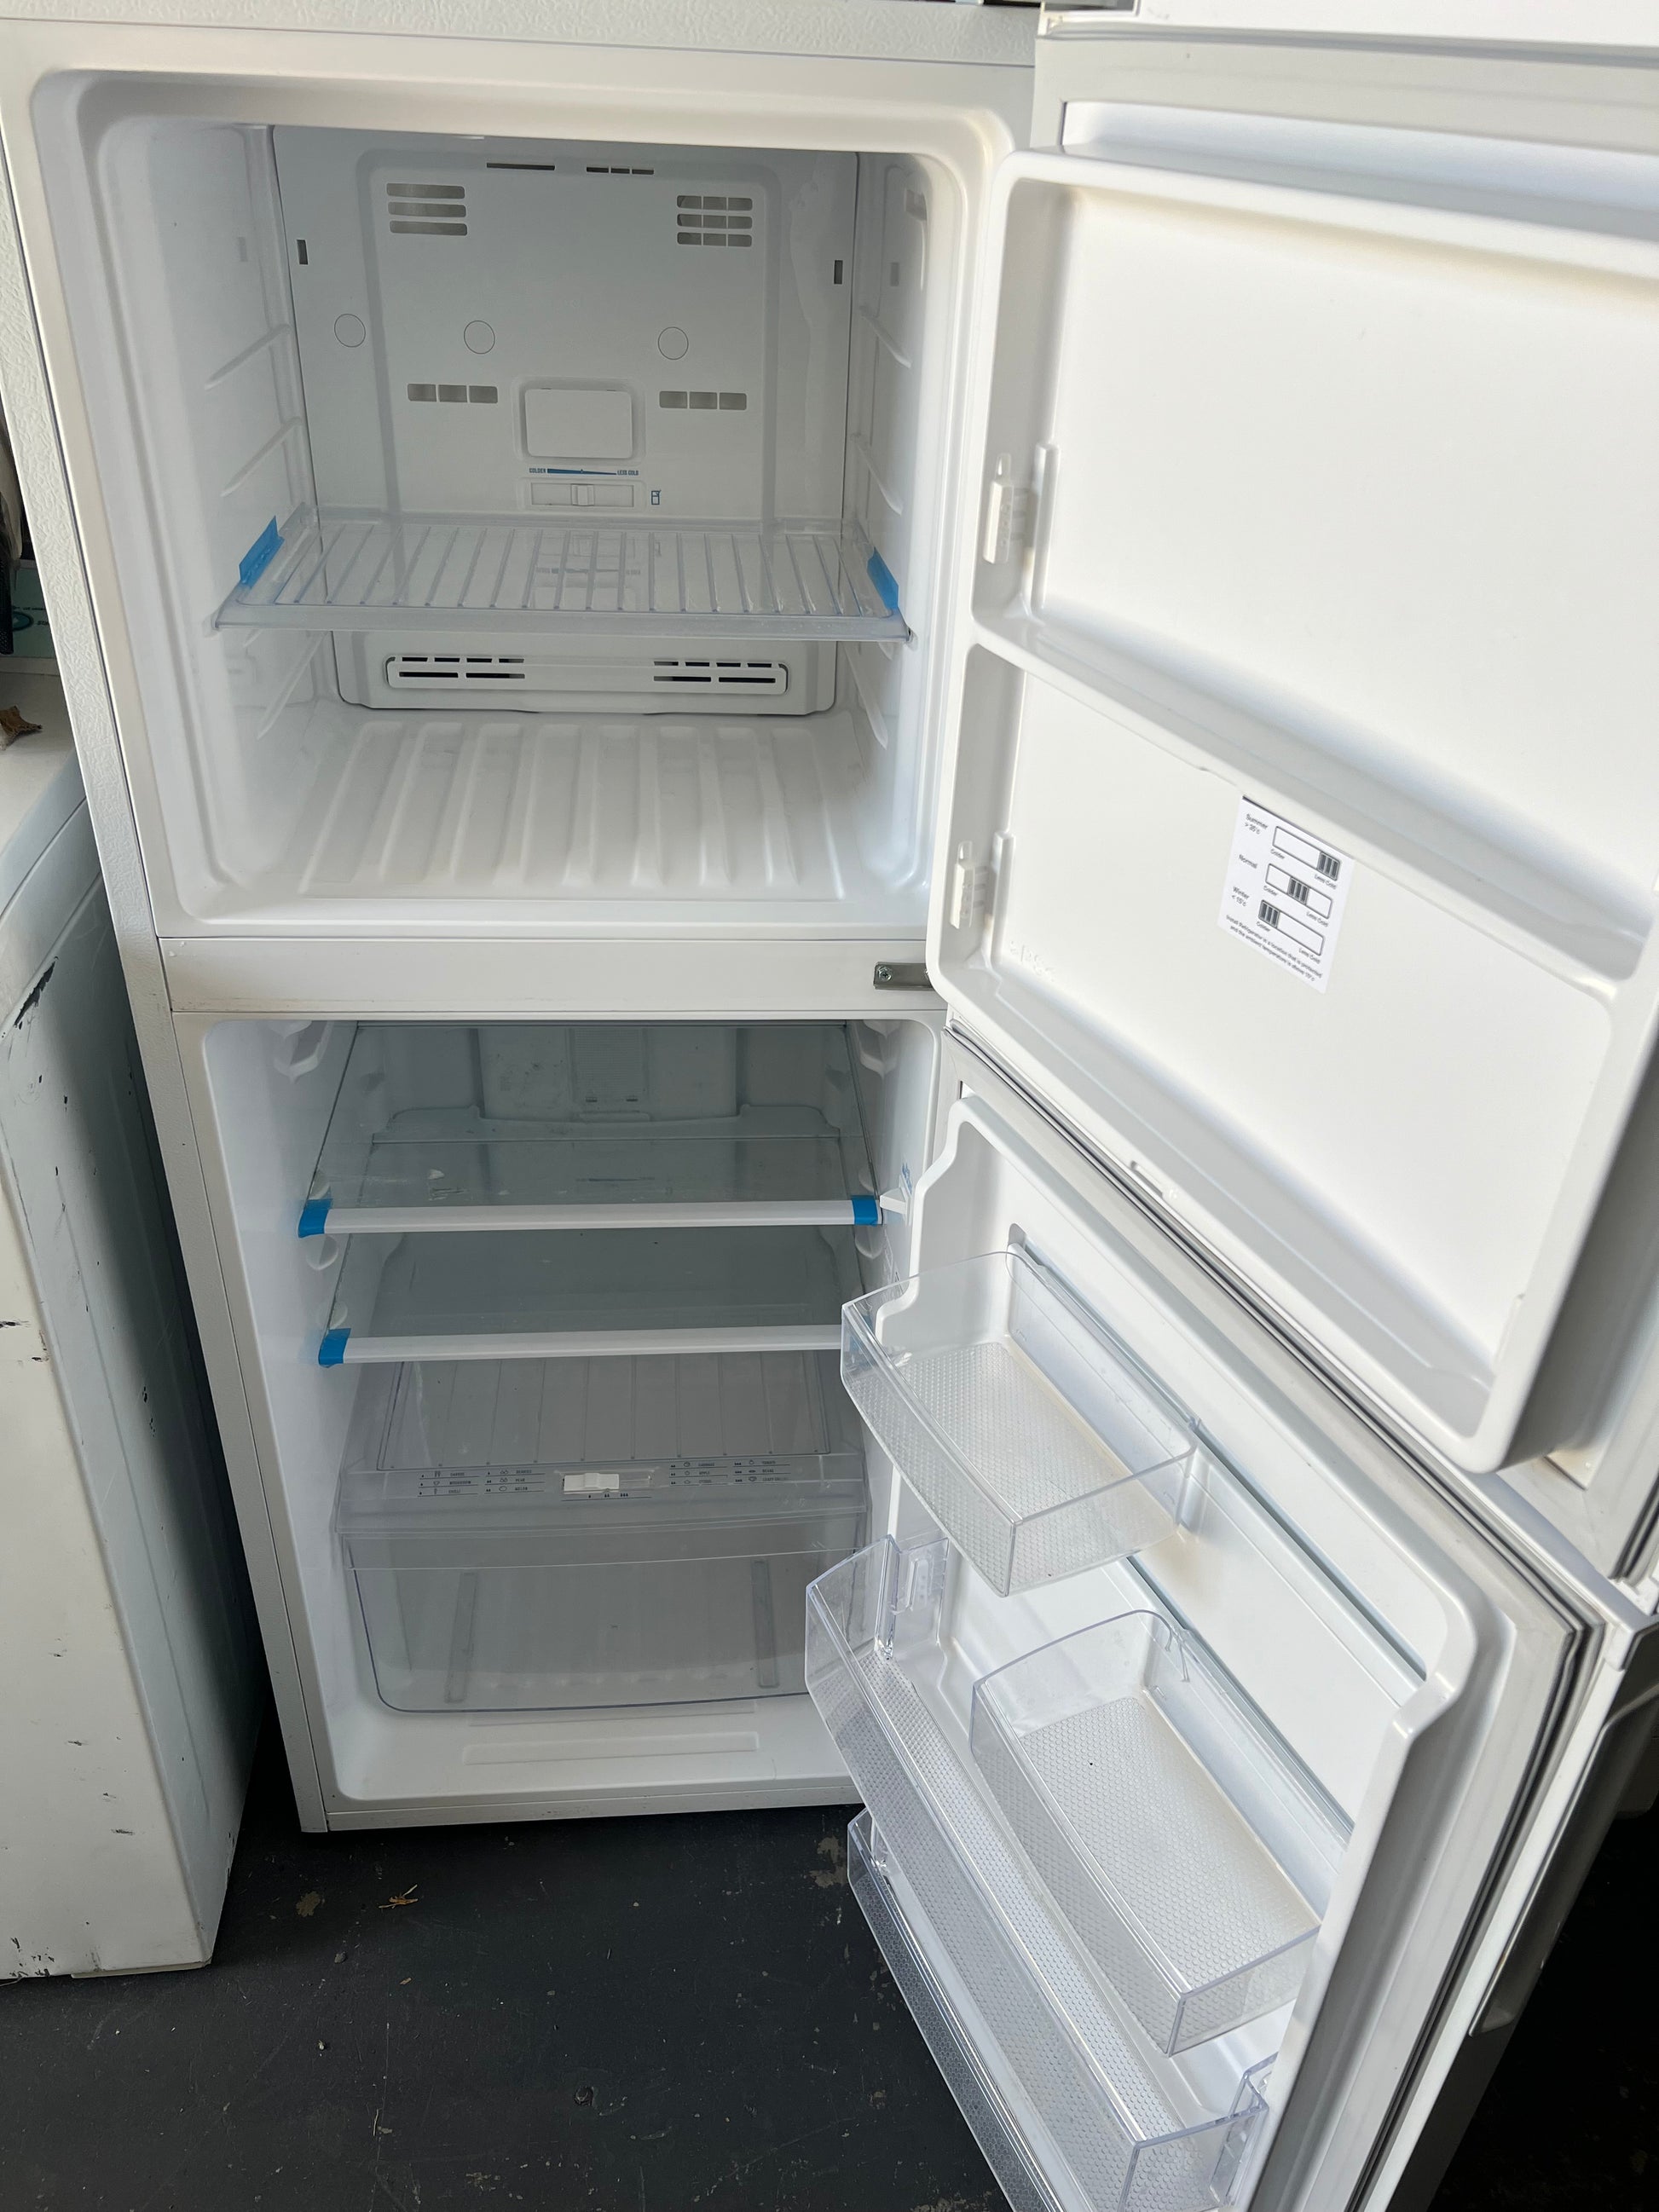 Kelvinator 202 litres fridge freezer and lg 7kg washing machine and Samsung oven | ADELAIDE